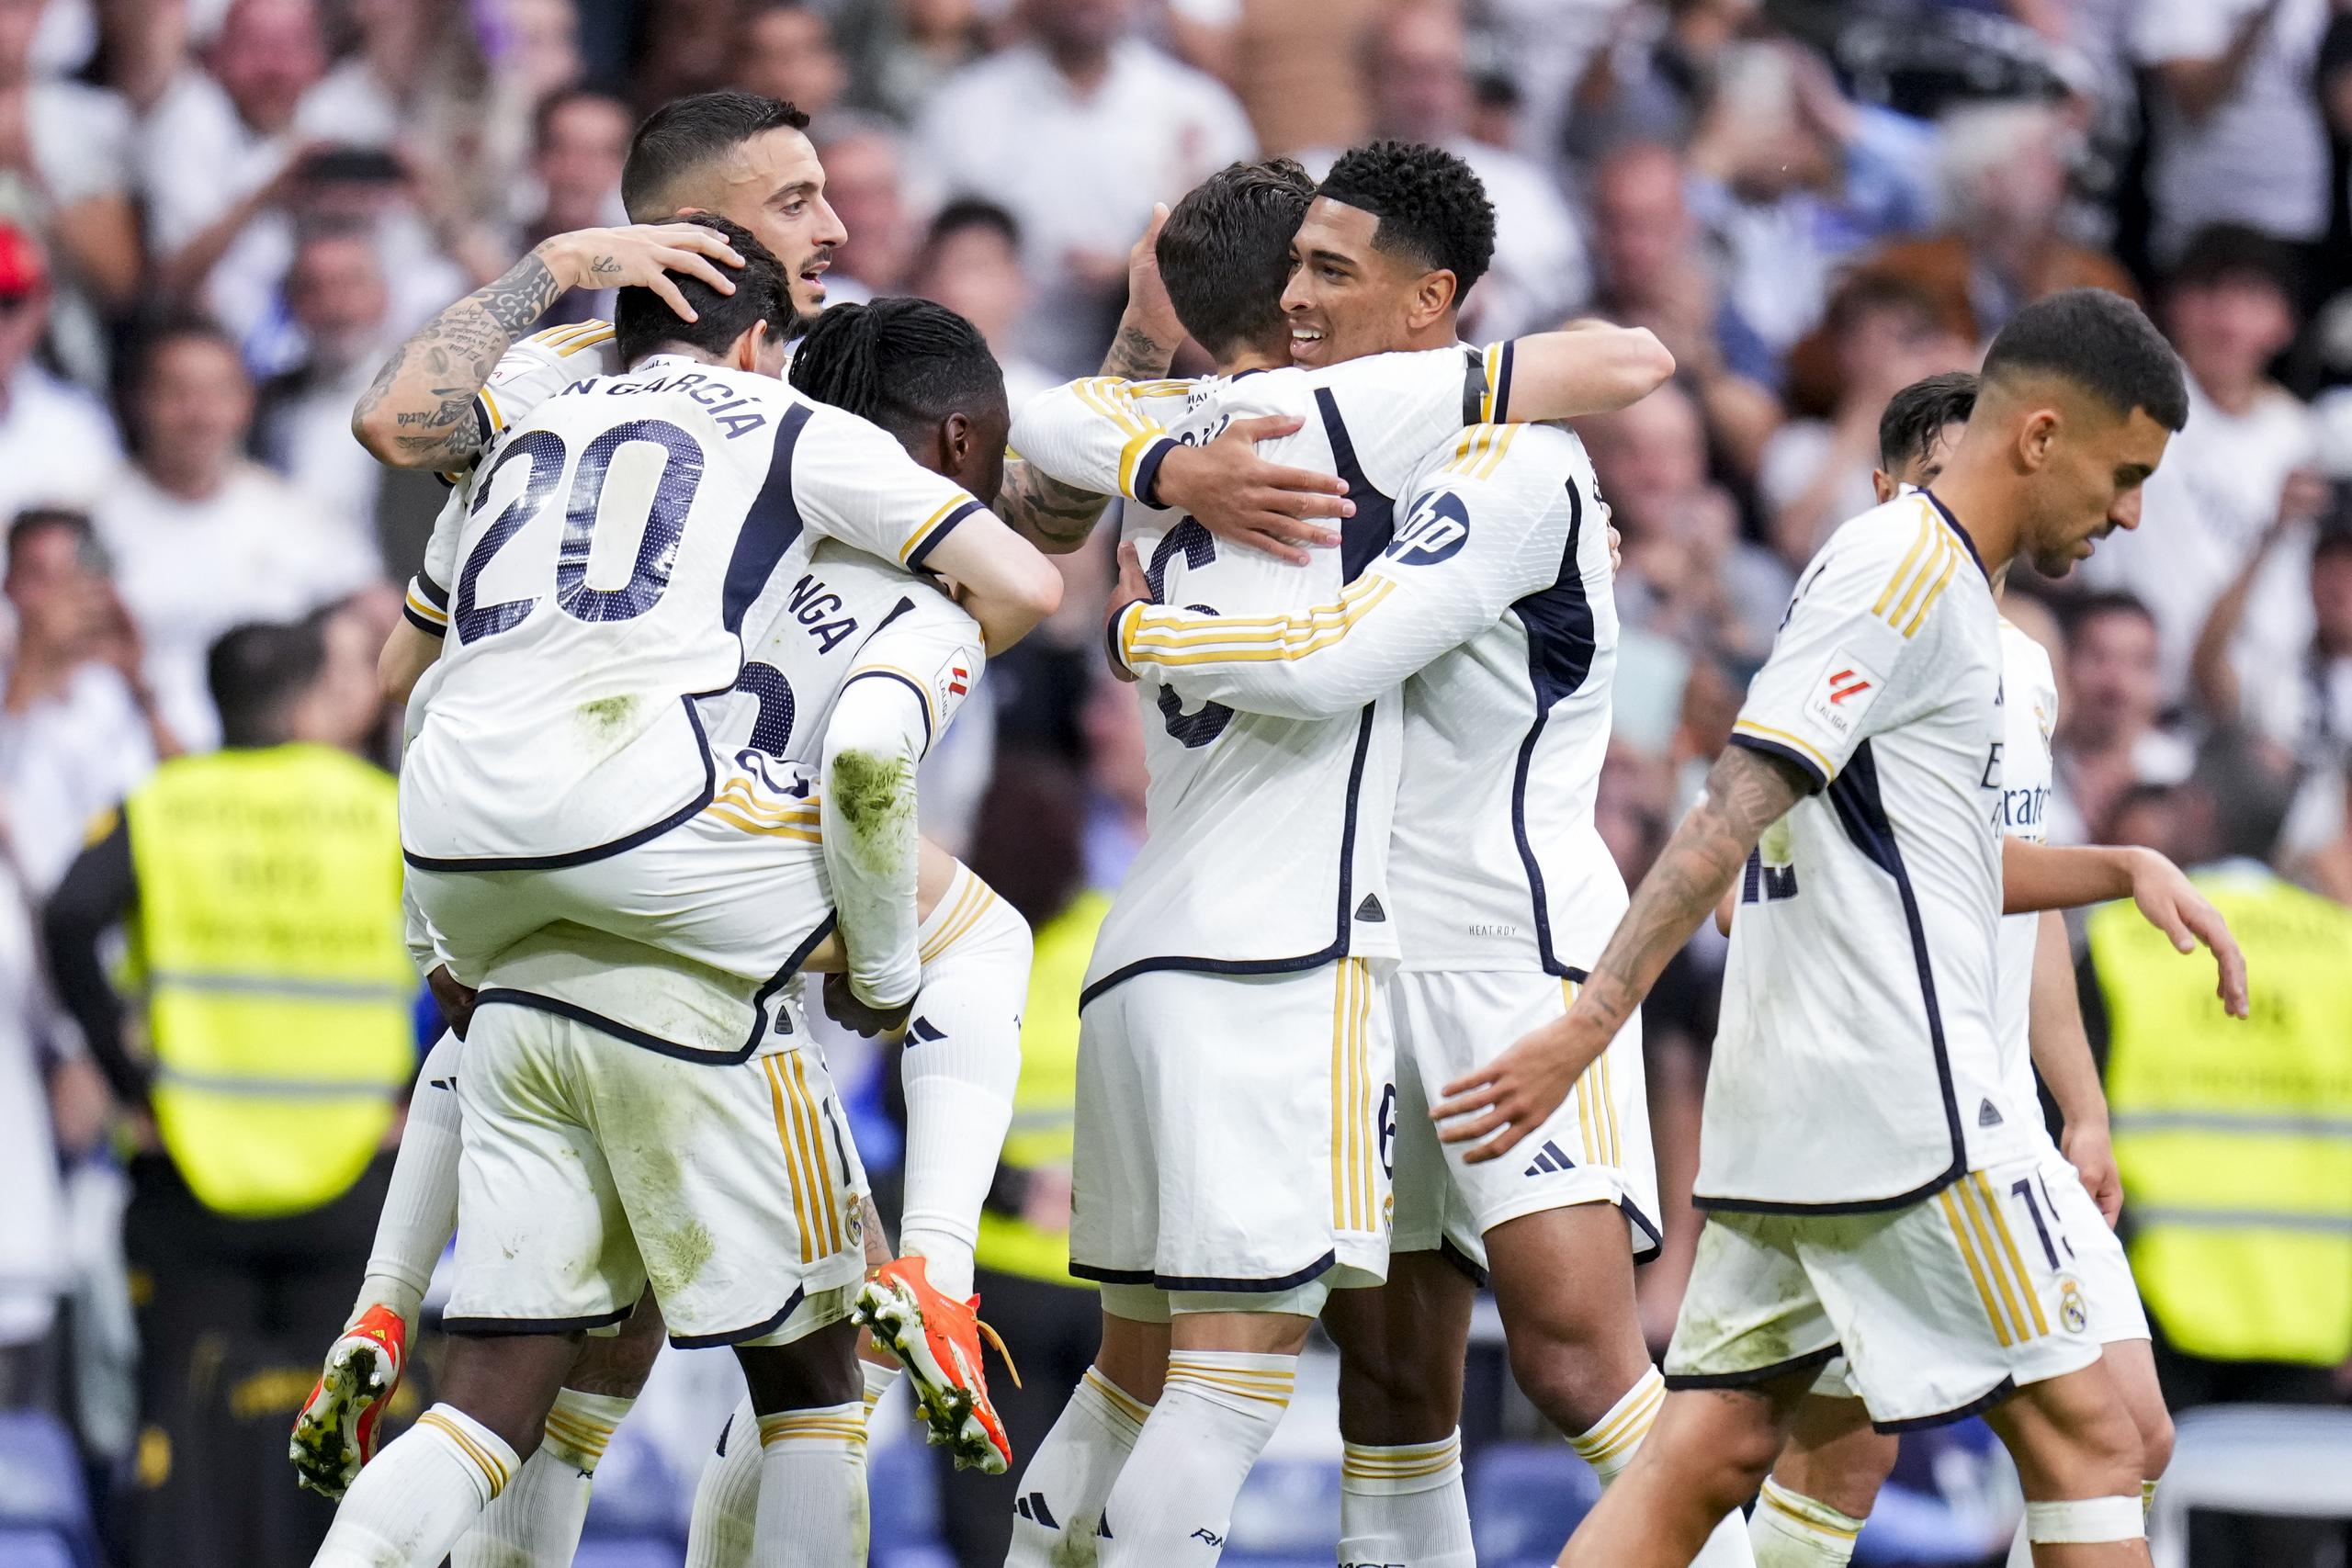 Jude Bellingham (center) celebra junto a sus compañeros tras marcar un gol frente al Cadiz.